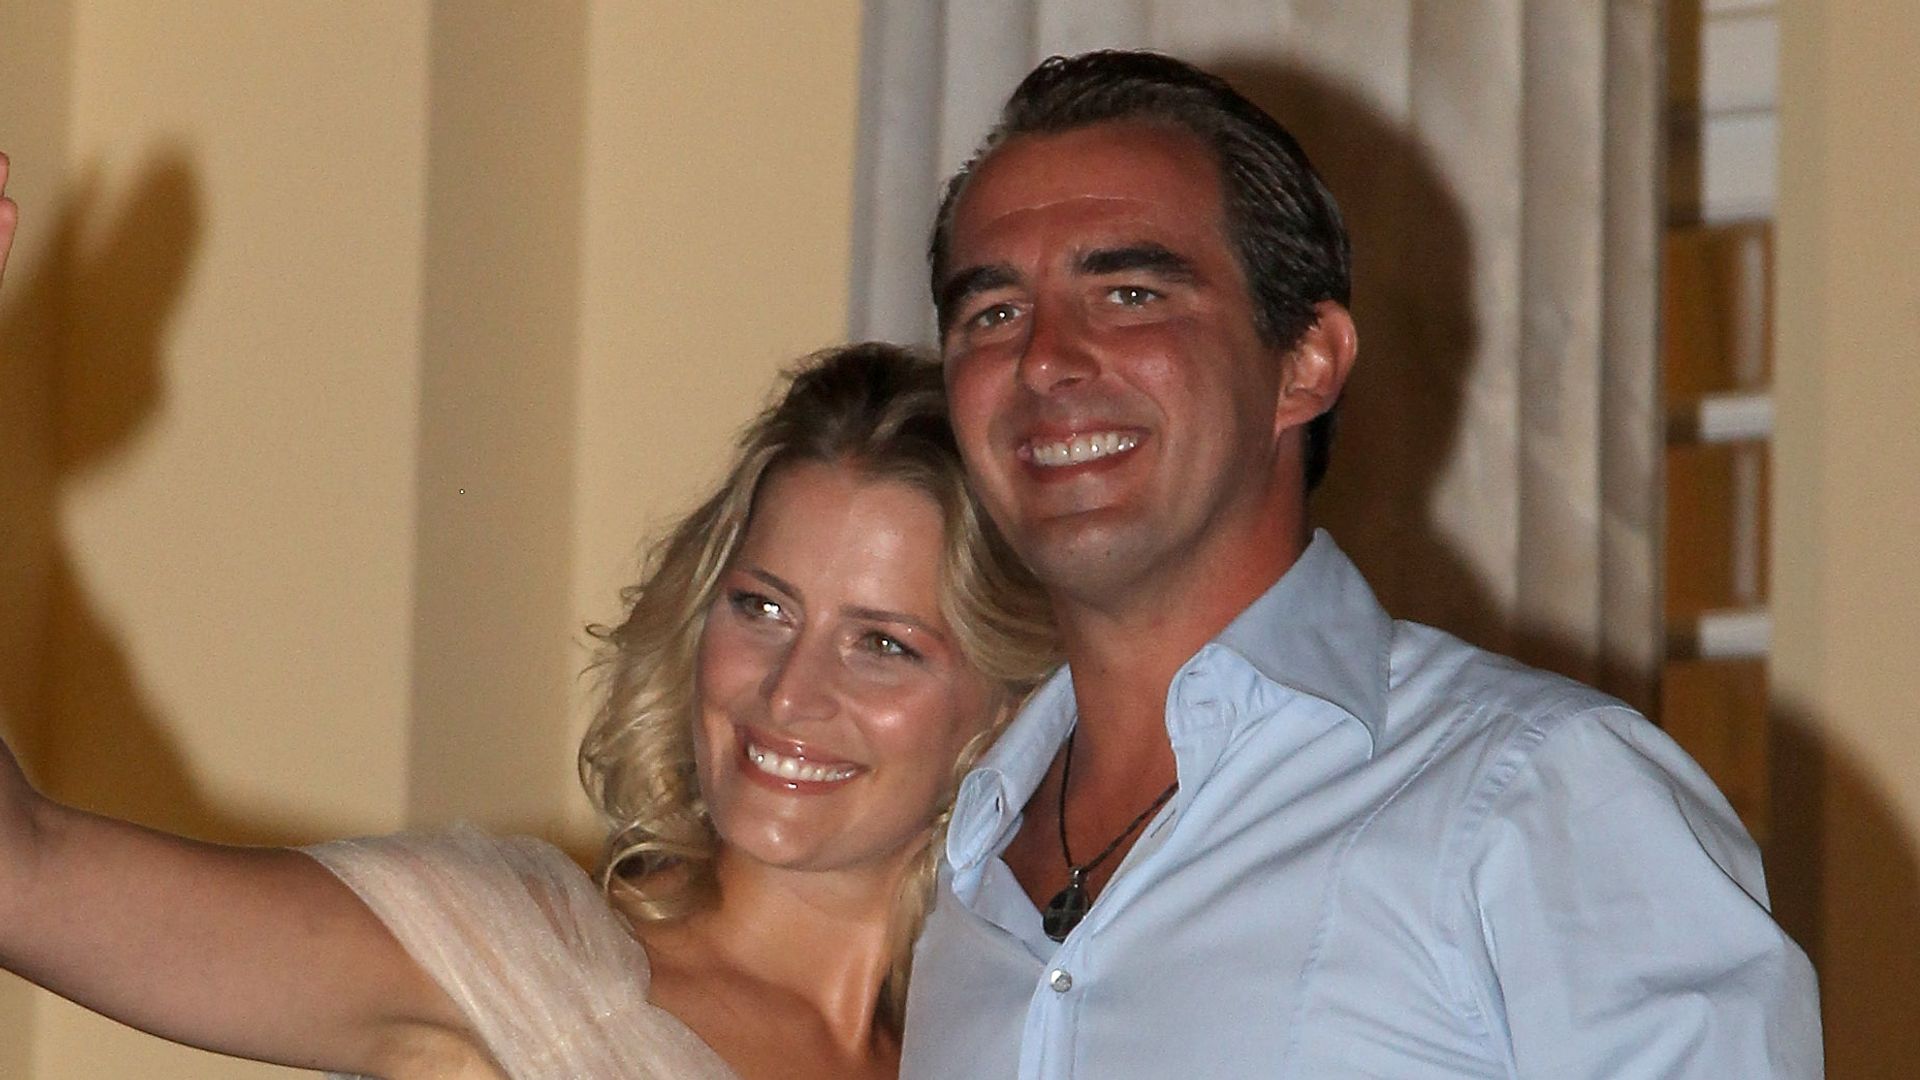 Royal couple announce shocking divorce news - details